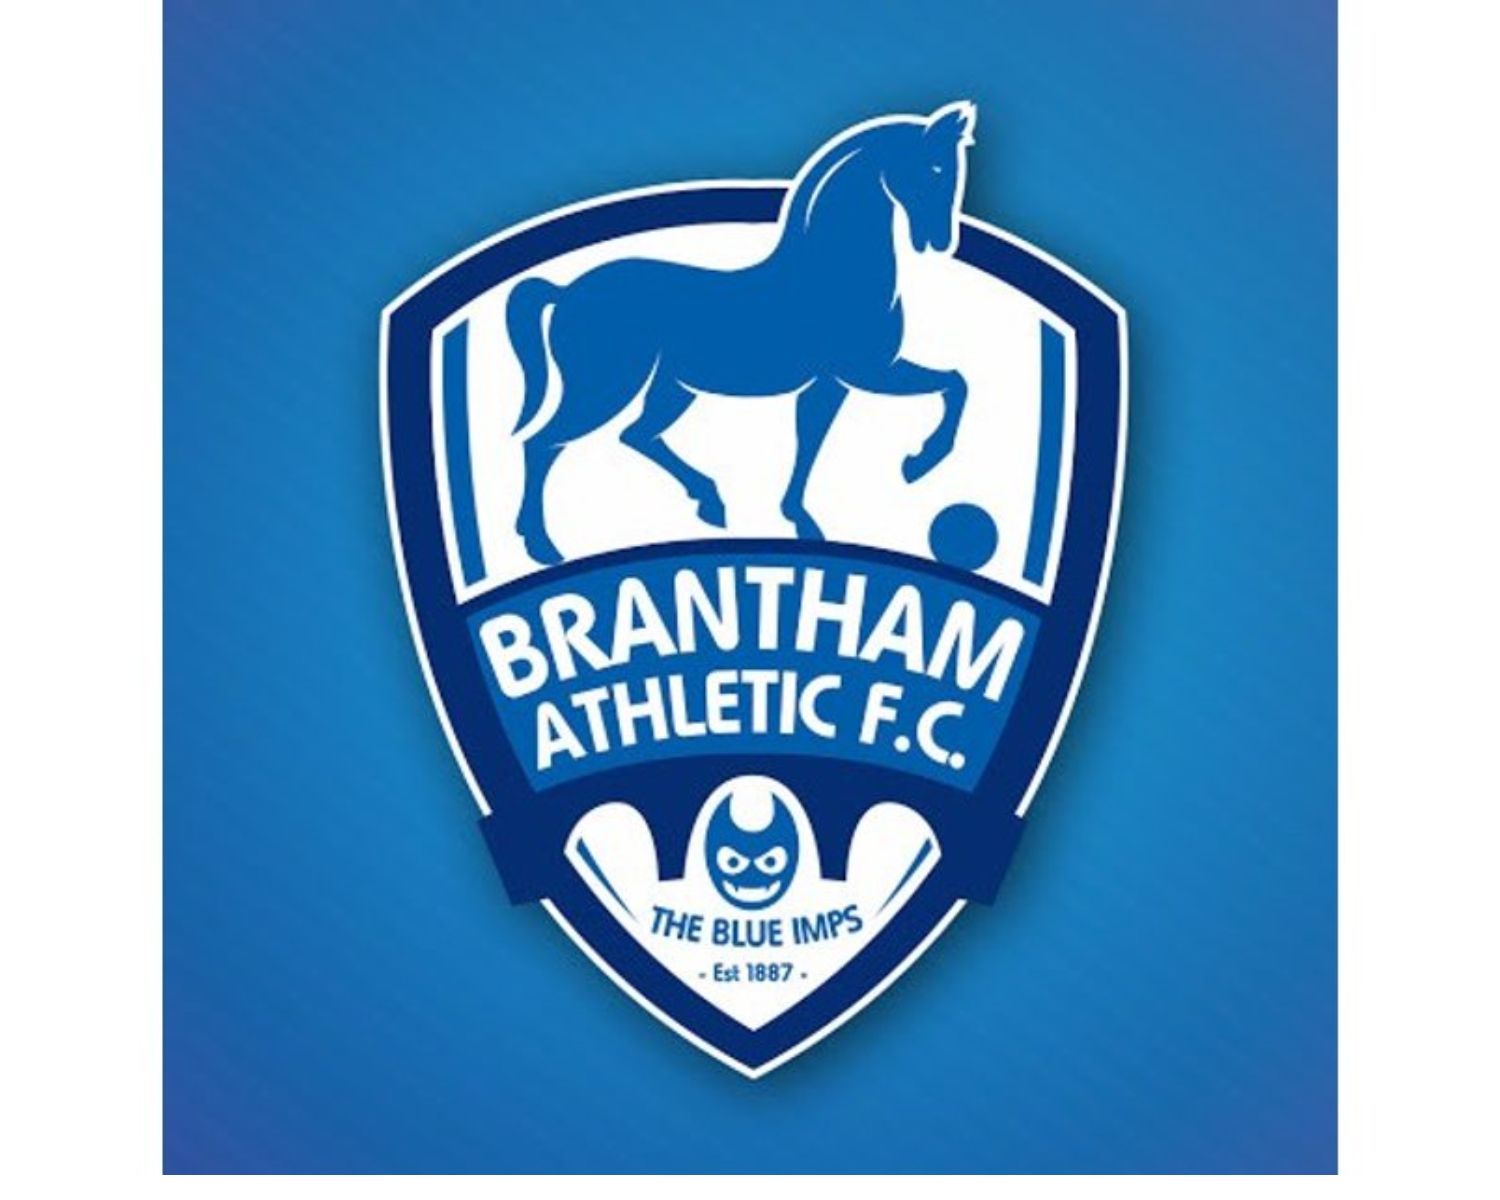 brantham-athletic-fc-14-football-club-facts